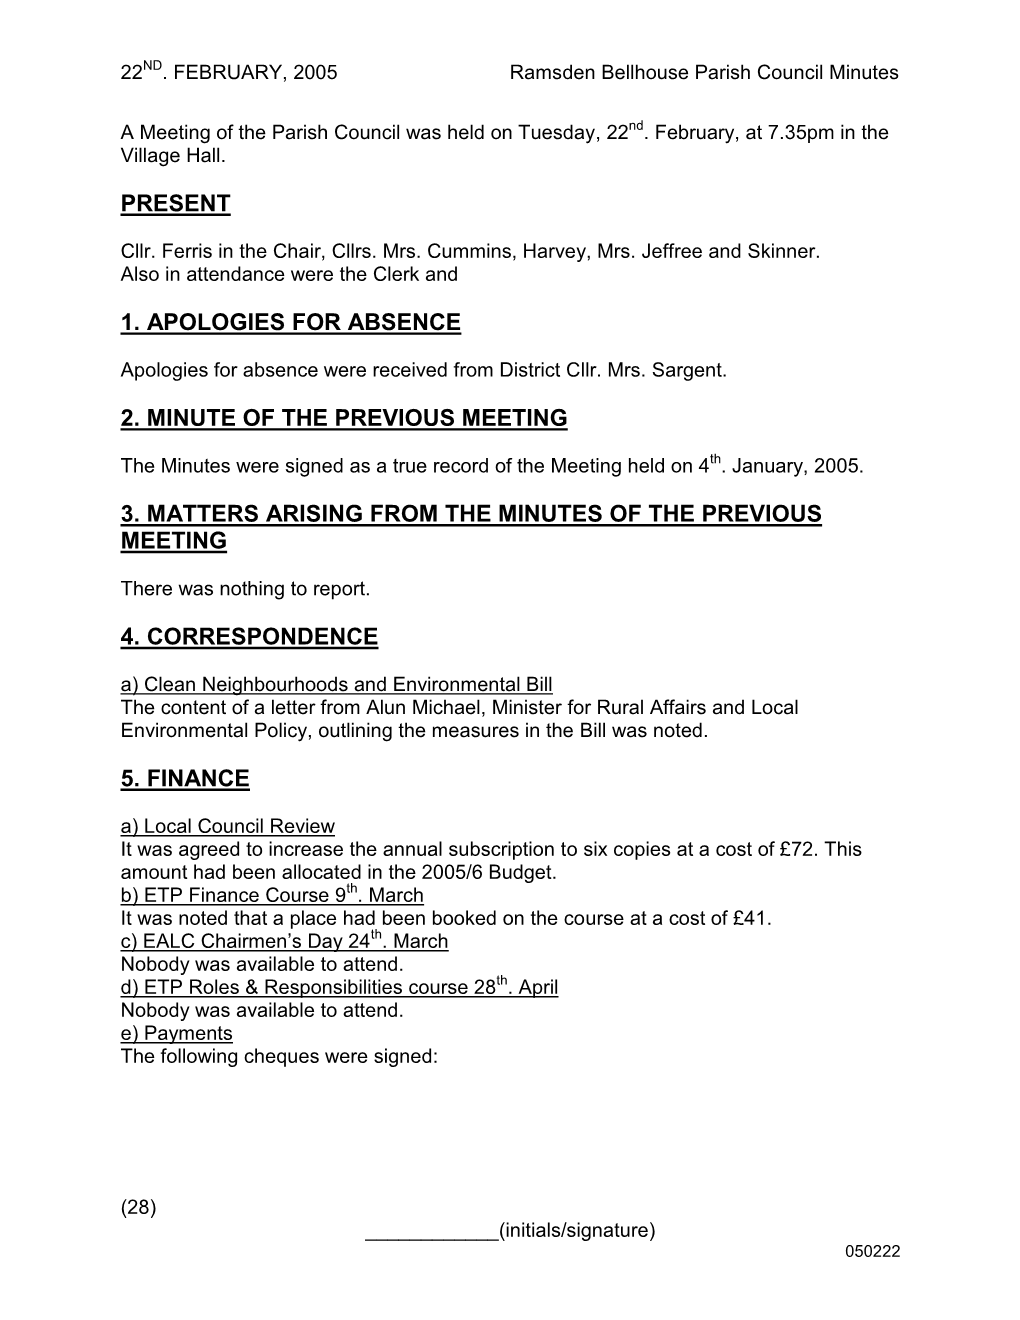 050222 Ramsden Bellhouse Parish Council Minutes 22 ND